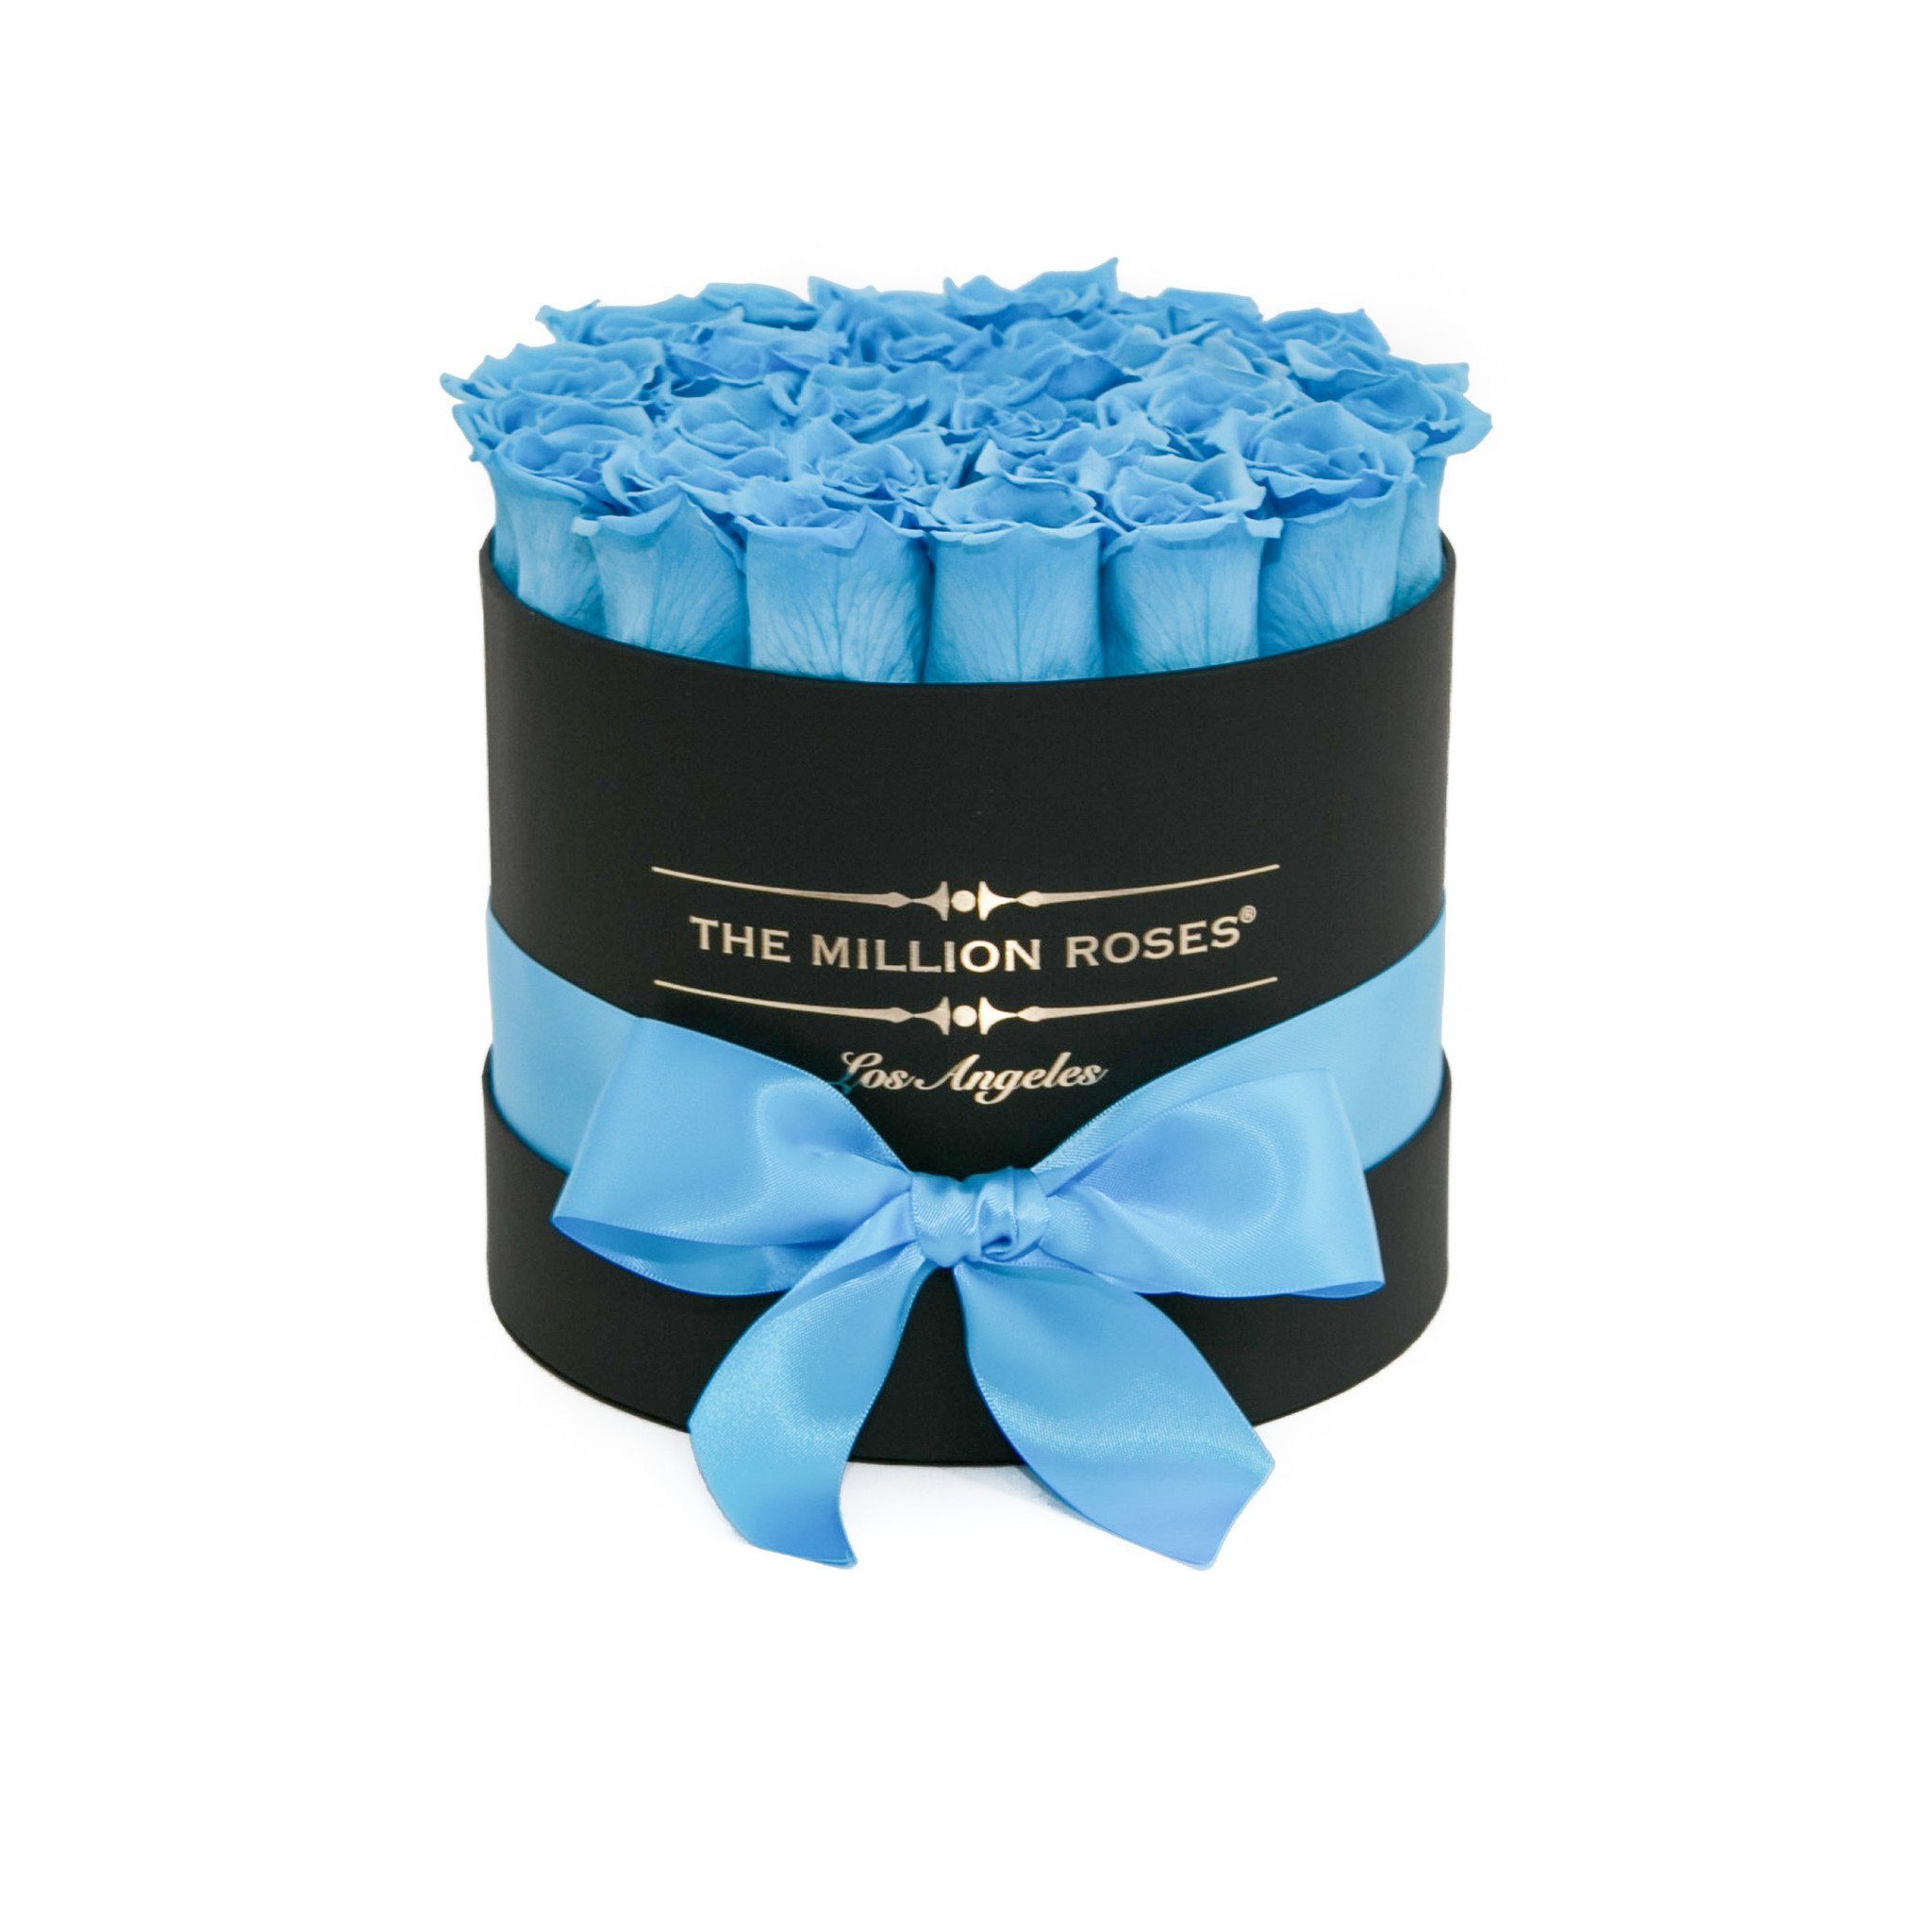 classic round box - black - light-blue roses light-blue long lasting roses - the million roses